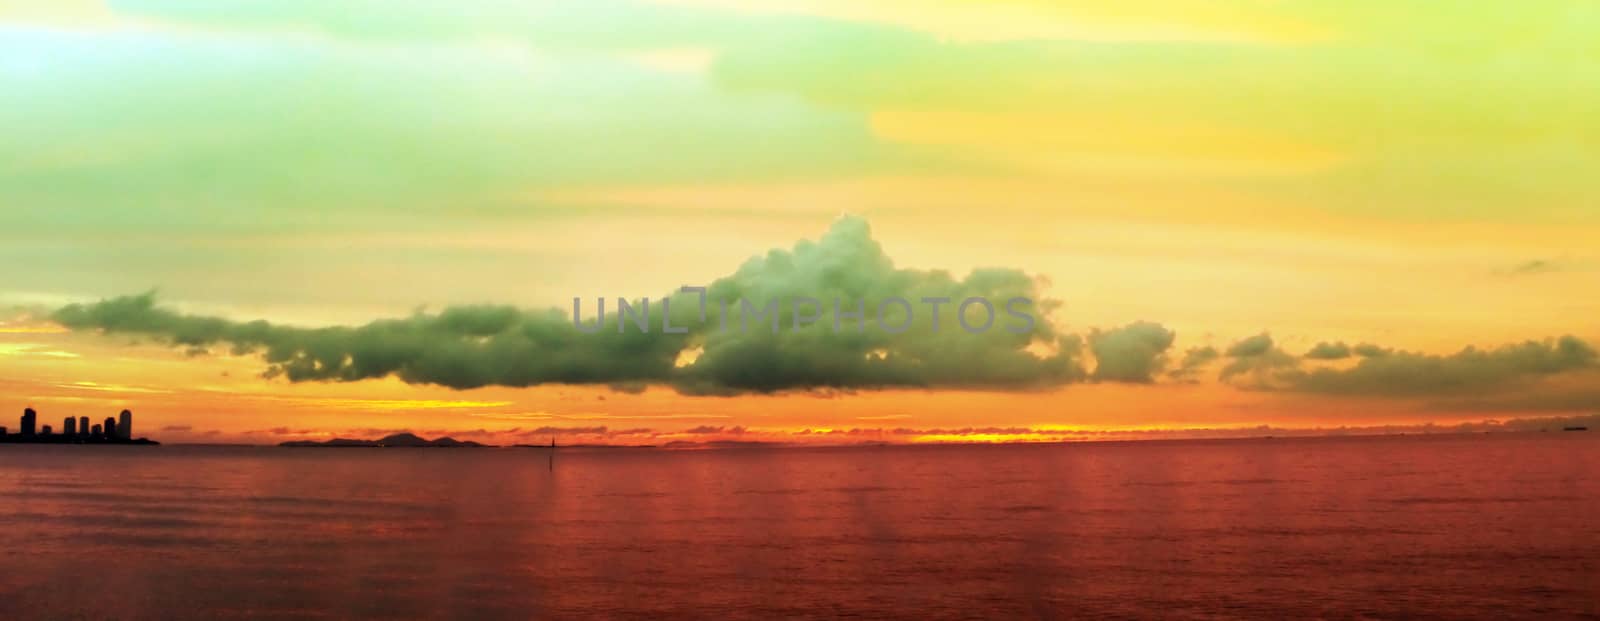 blur of sunset on horizon in sea panorama by Darkfox